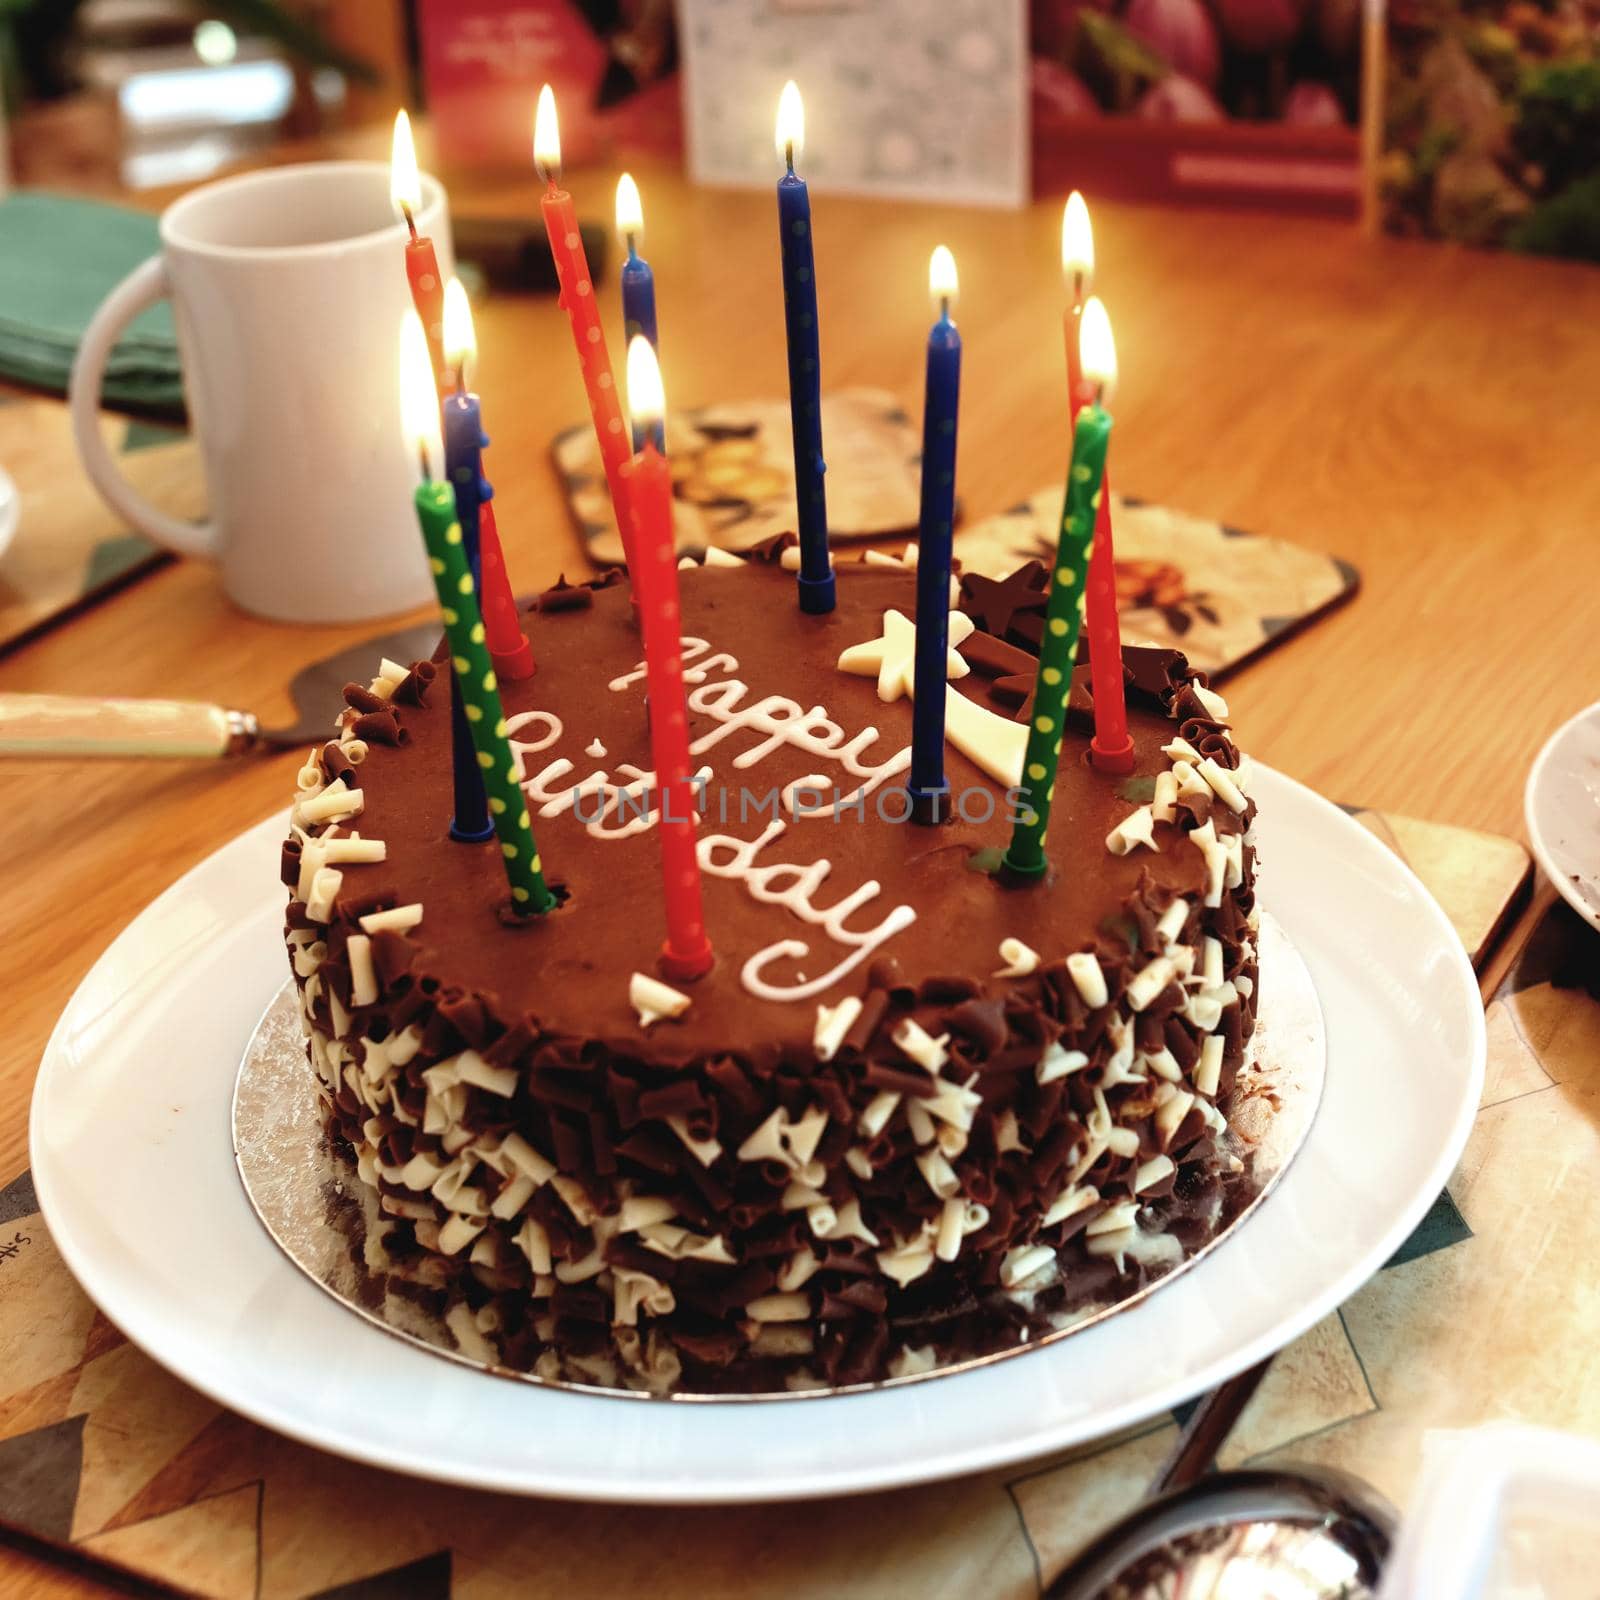 chocolate birthday cake with candles by Iryna_Melnyk